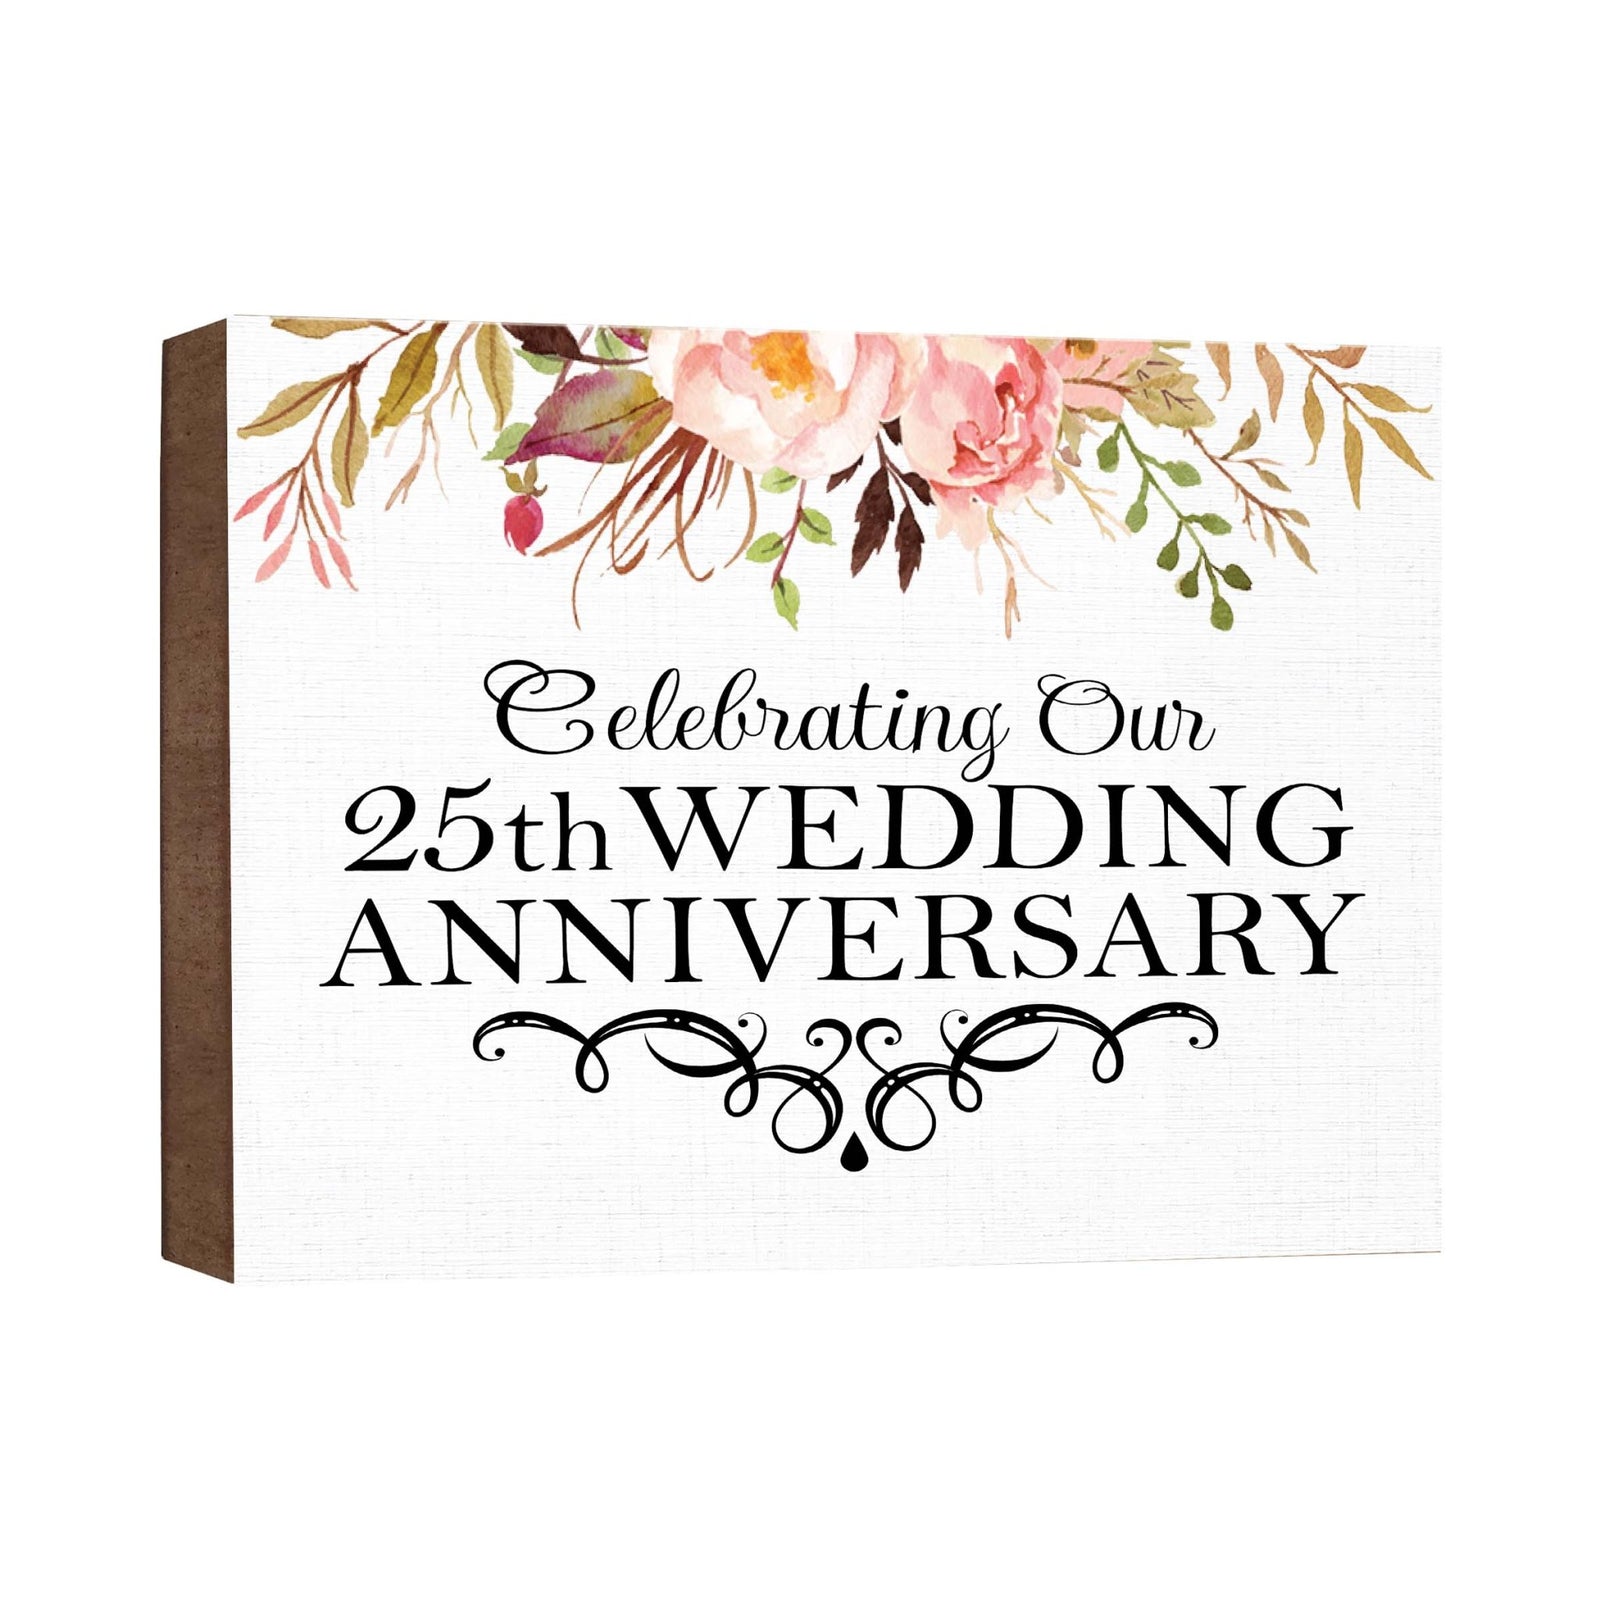 Celebrating 25th Wedding Anniversary Wall Plaque - LifeSong Milestones